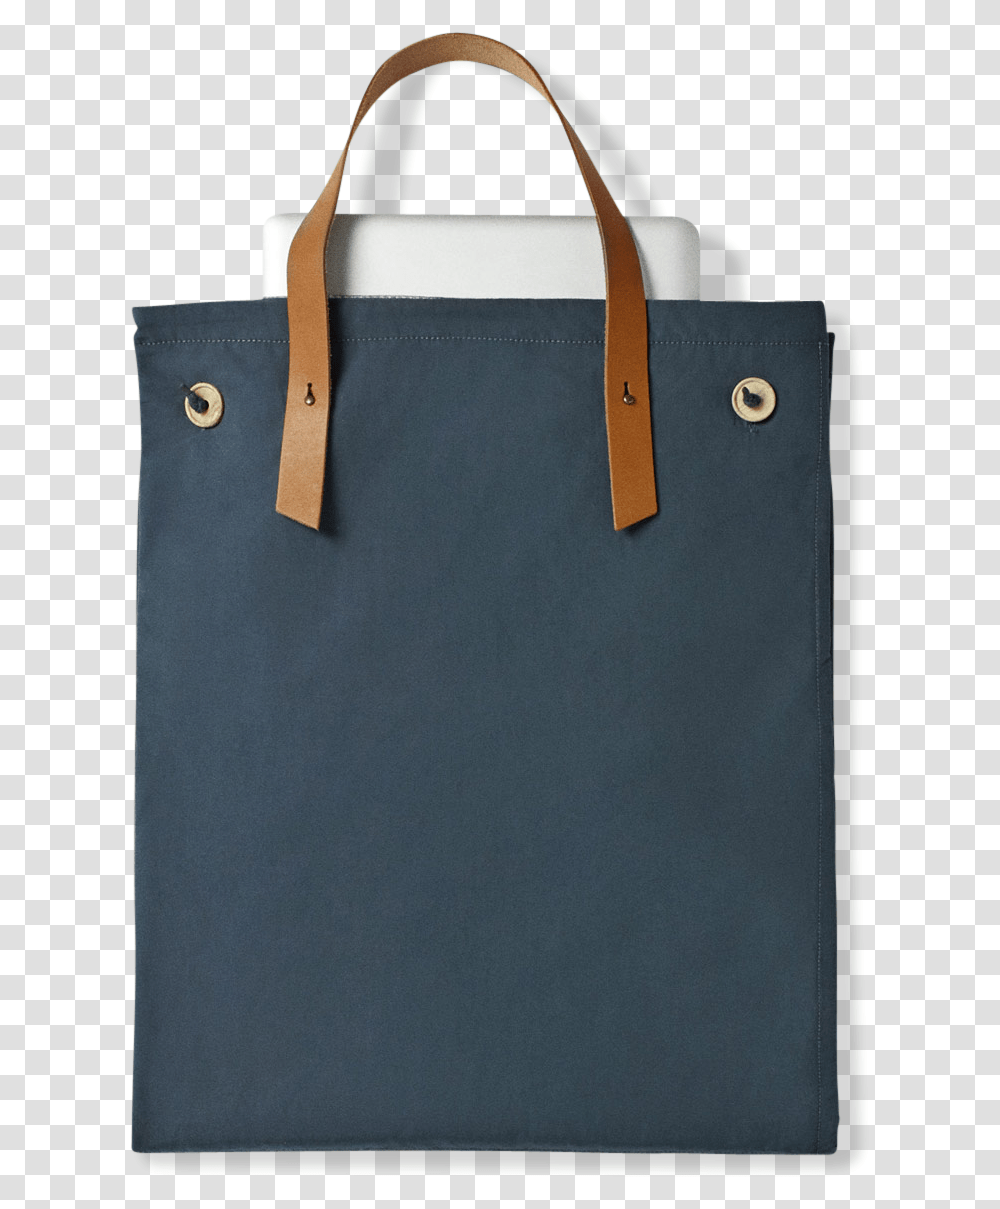 Picnic Tote Blanket 0 Tote Bag, Handbag, Accessories, Accessory, Shopping Bag Transparent Png